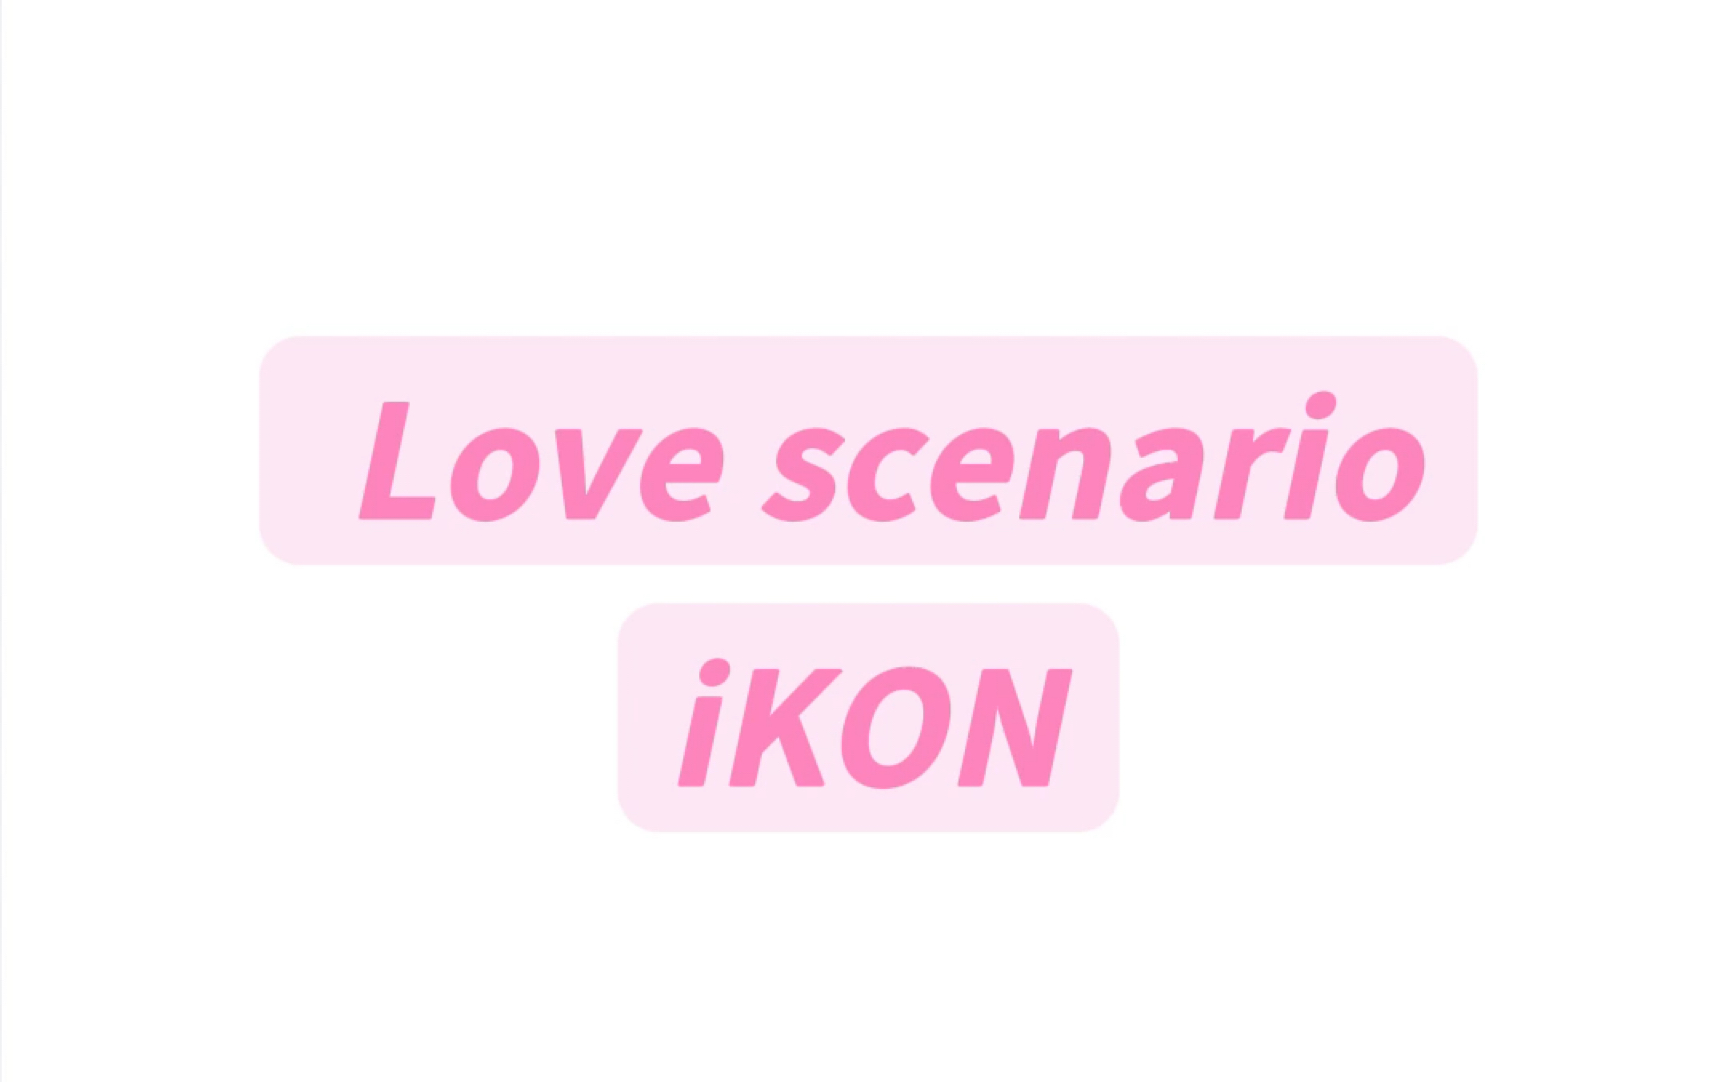 Love scenario iKON 纯享版音译教学 #ikon #LOVESCEN #lovescenario舞蹈